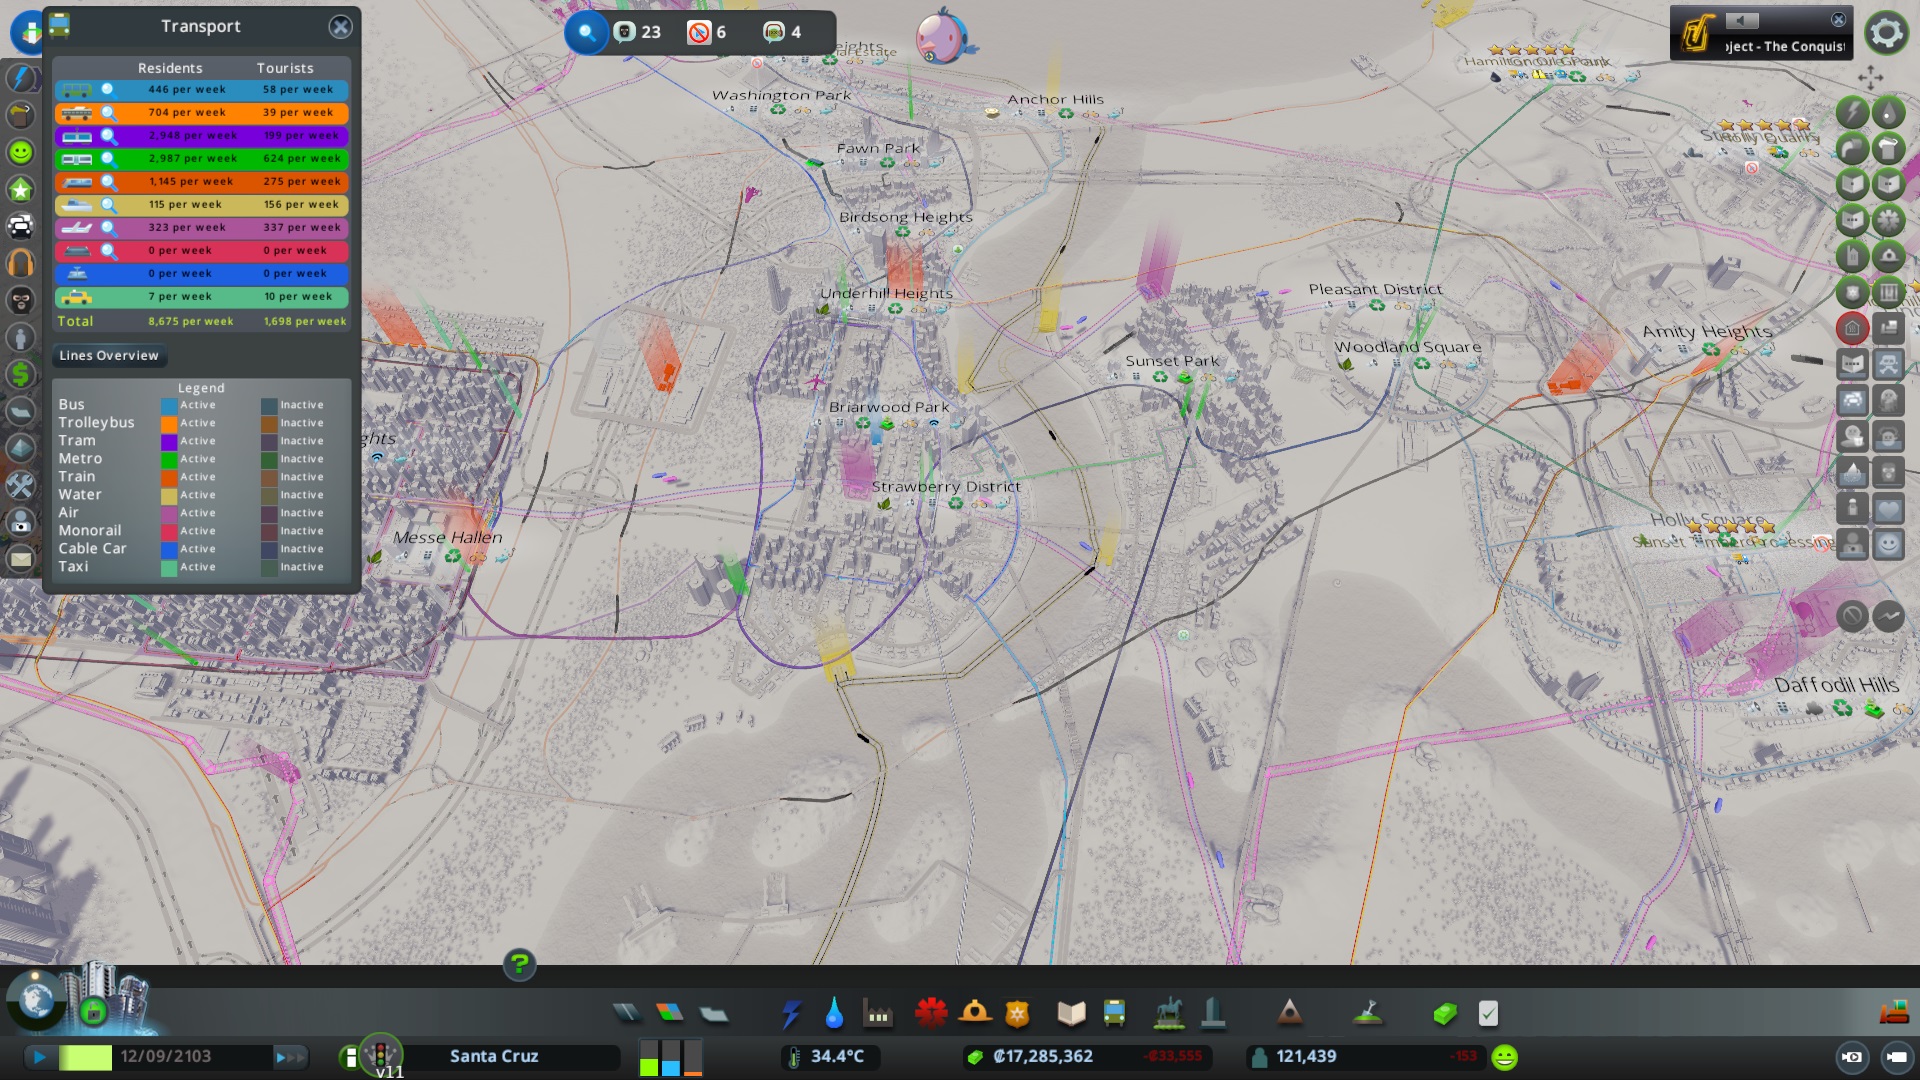 Cities Skylines Screenshot 2020.08.10öv.jpg